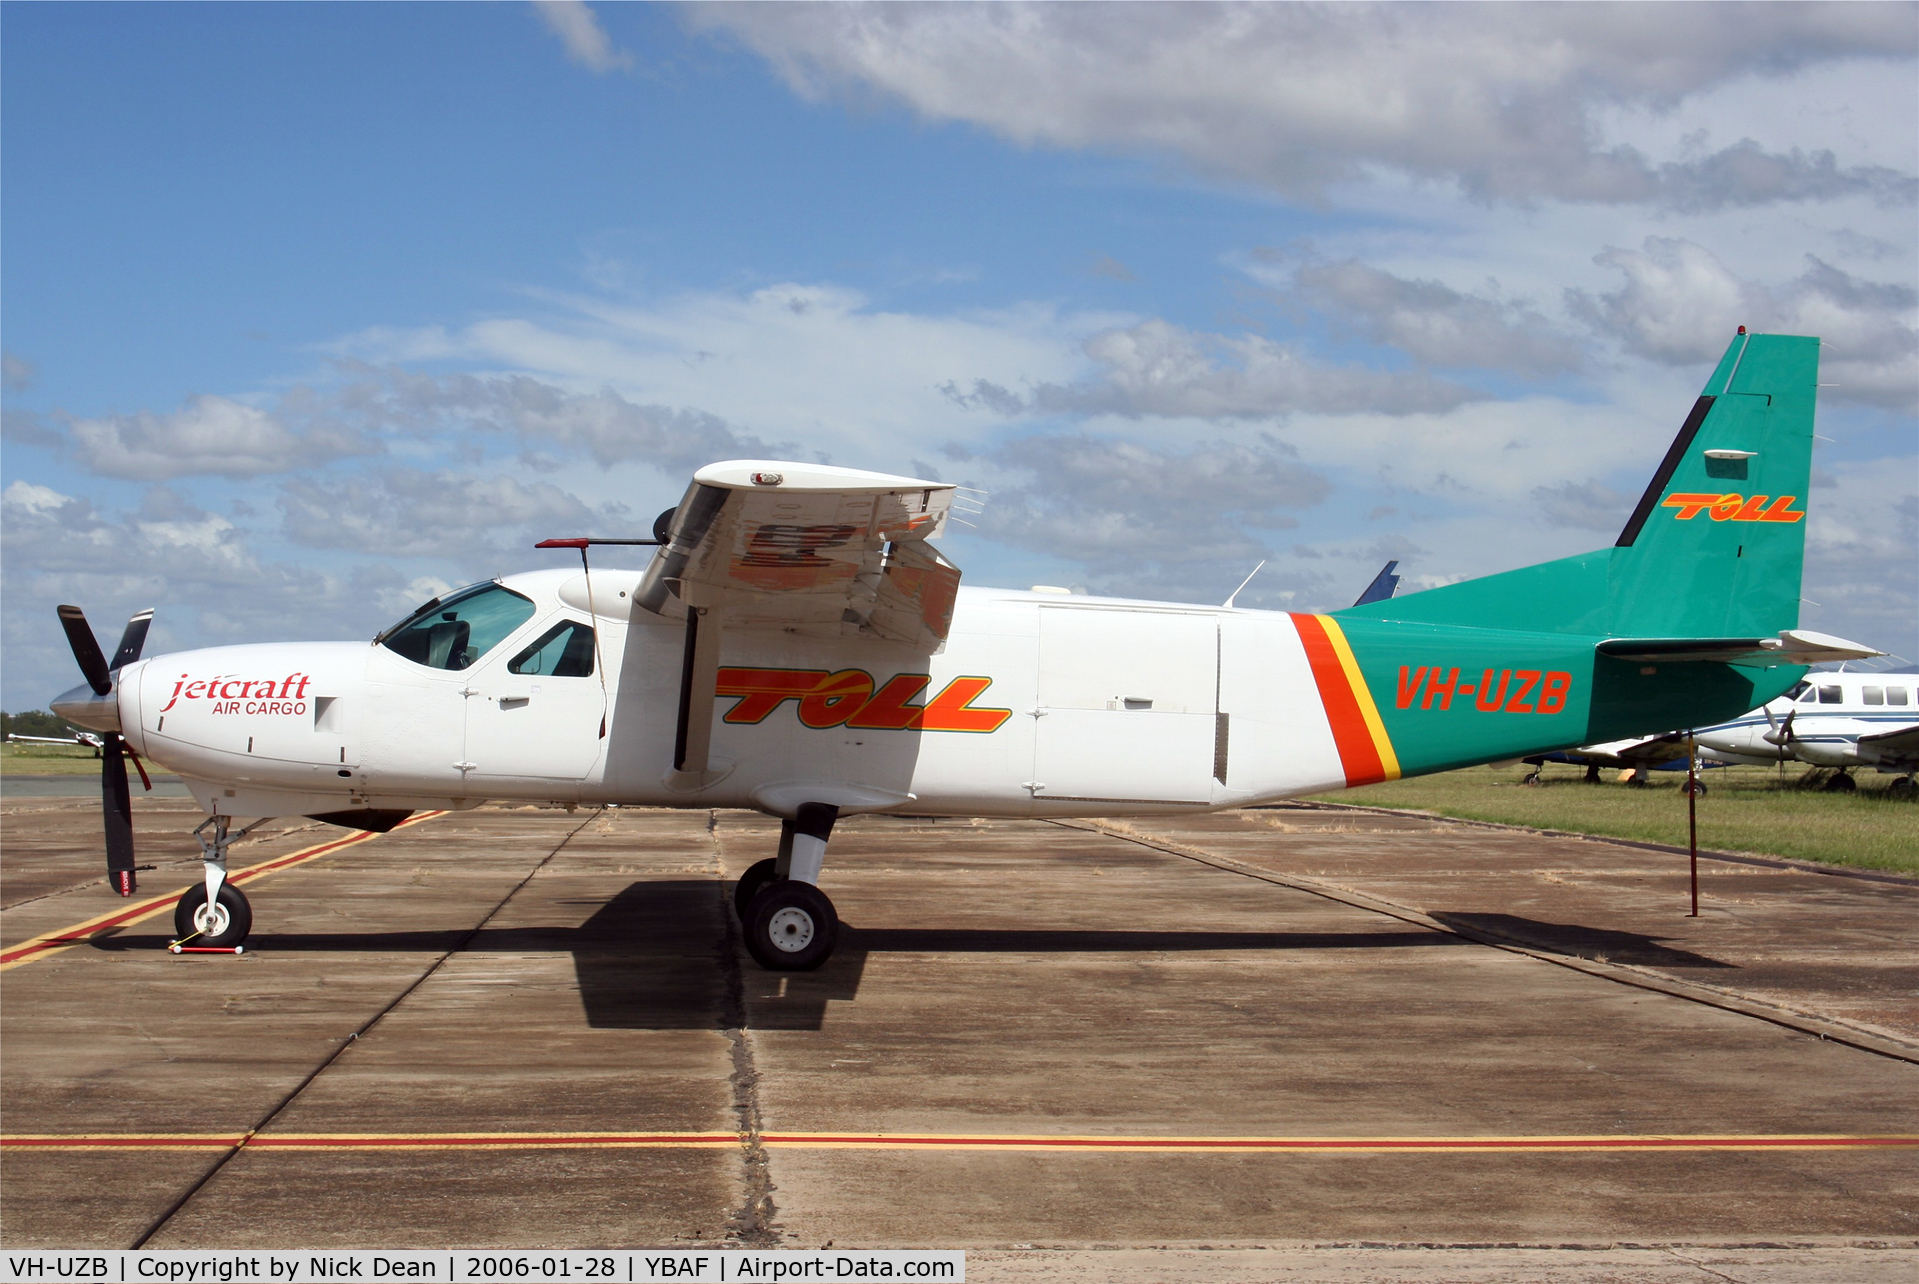 VH-UZB, 1999 Cessna 208B Super Cargomaster C/N 208B0769, /